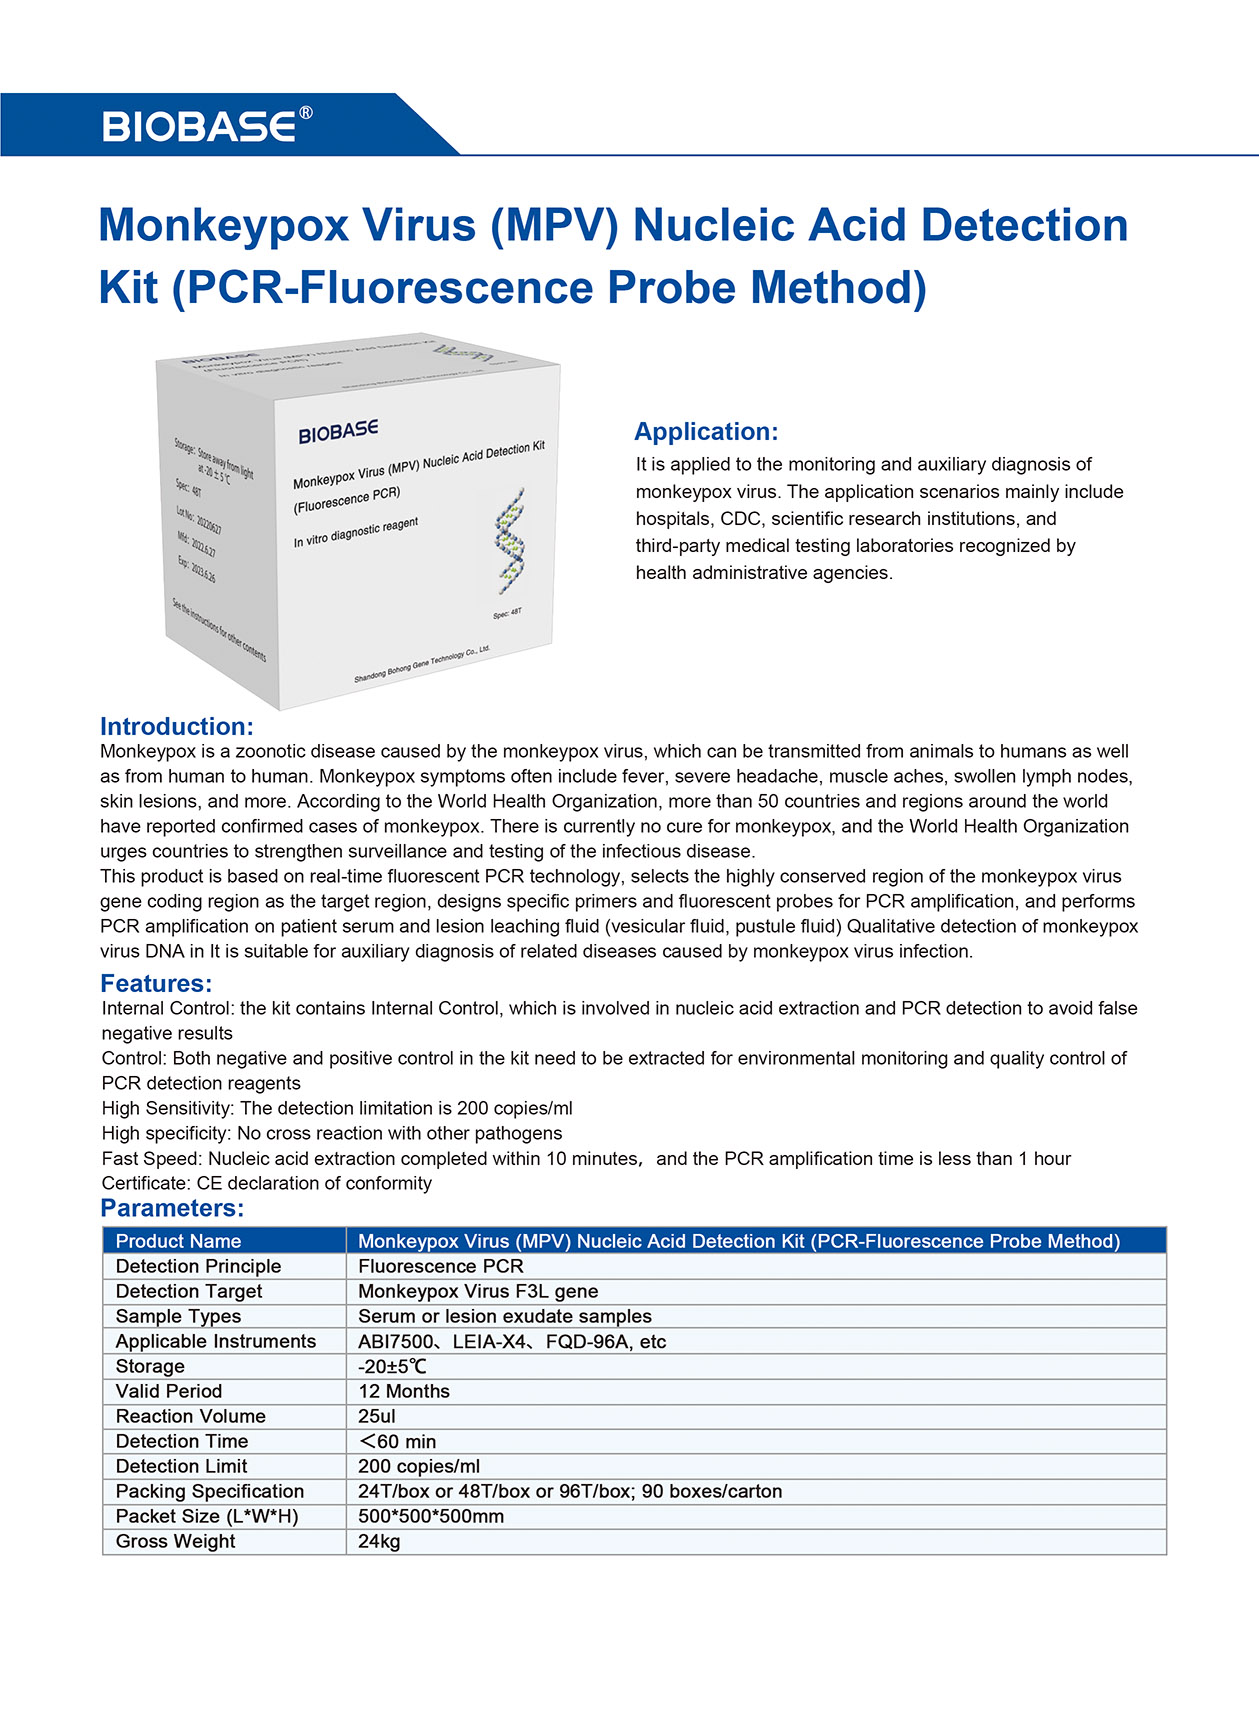 Monkeypox Virus (MPV) Nucleic Acid Detection Kit (PCR-Fluorescence Probe Method)